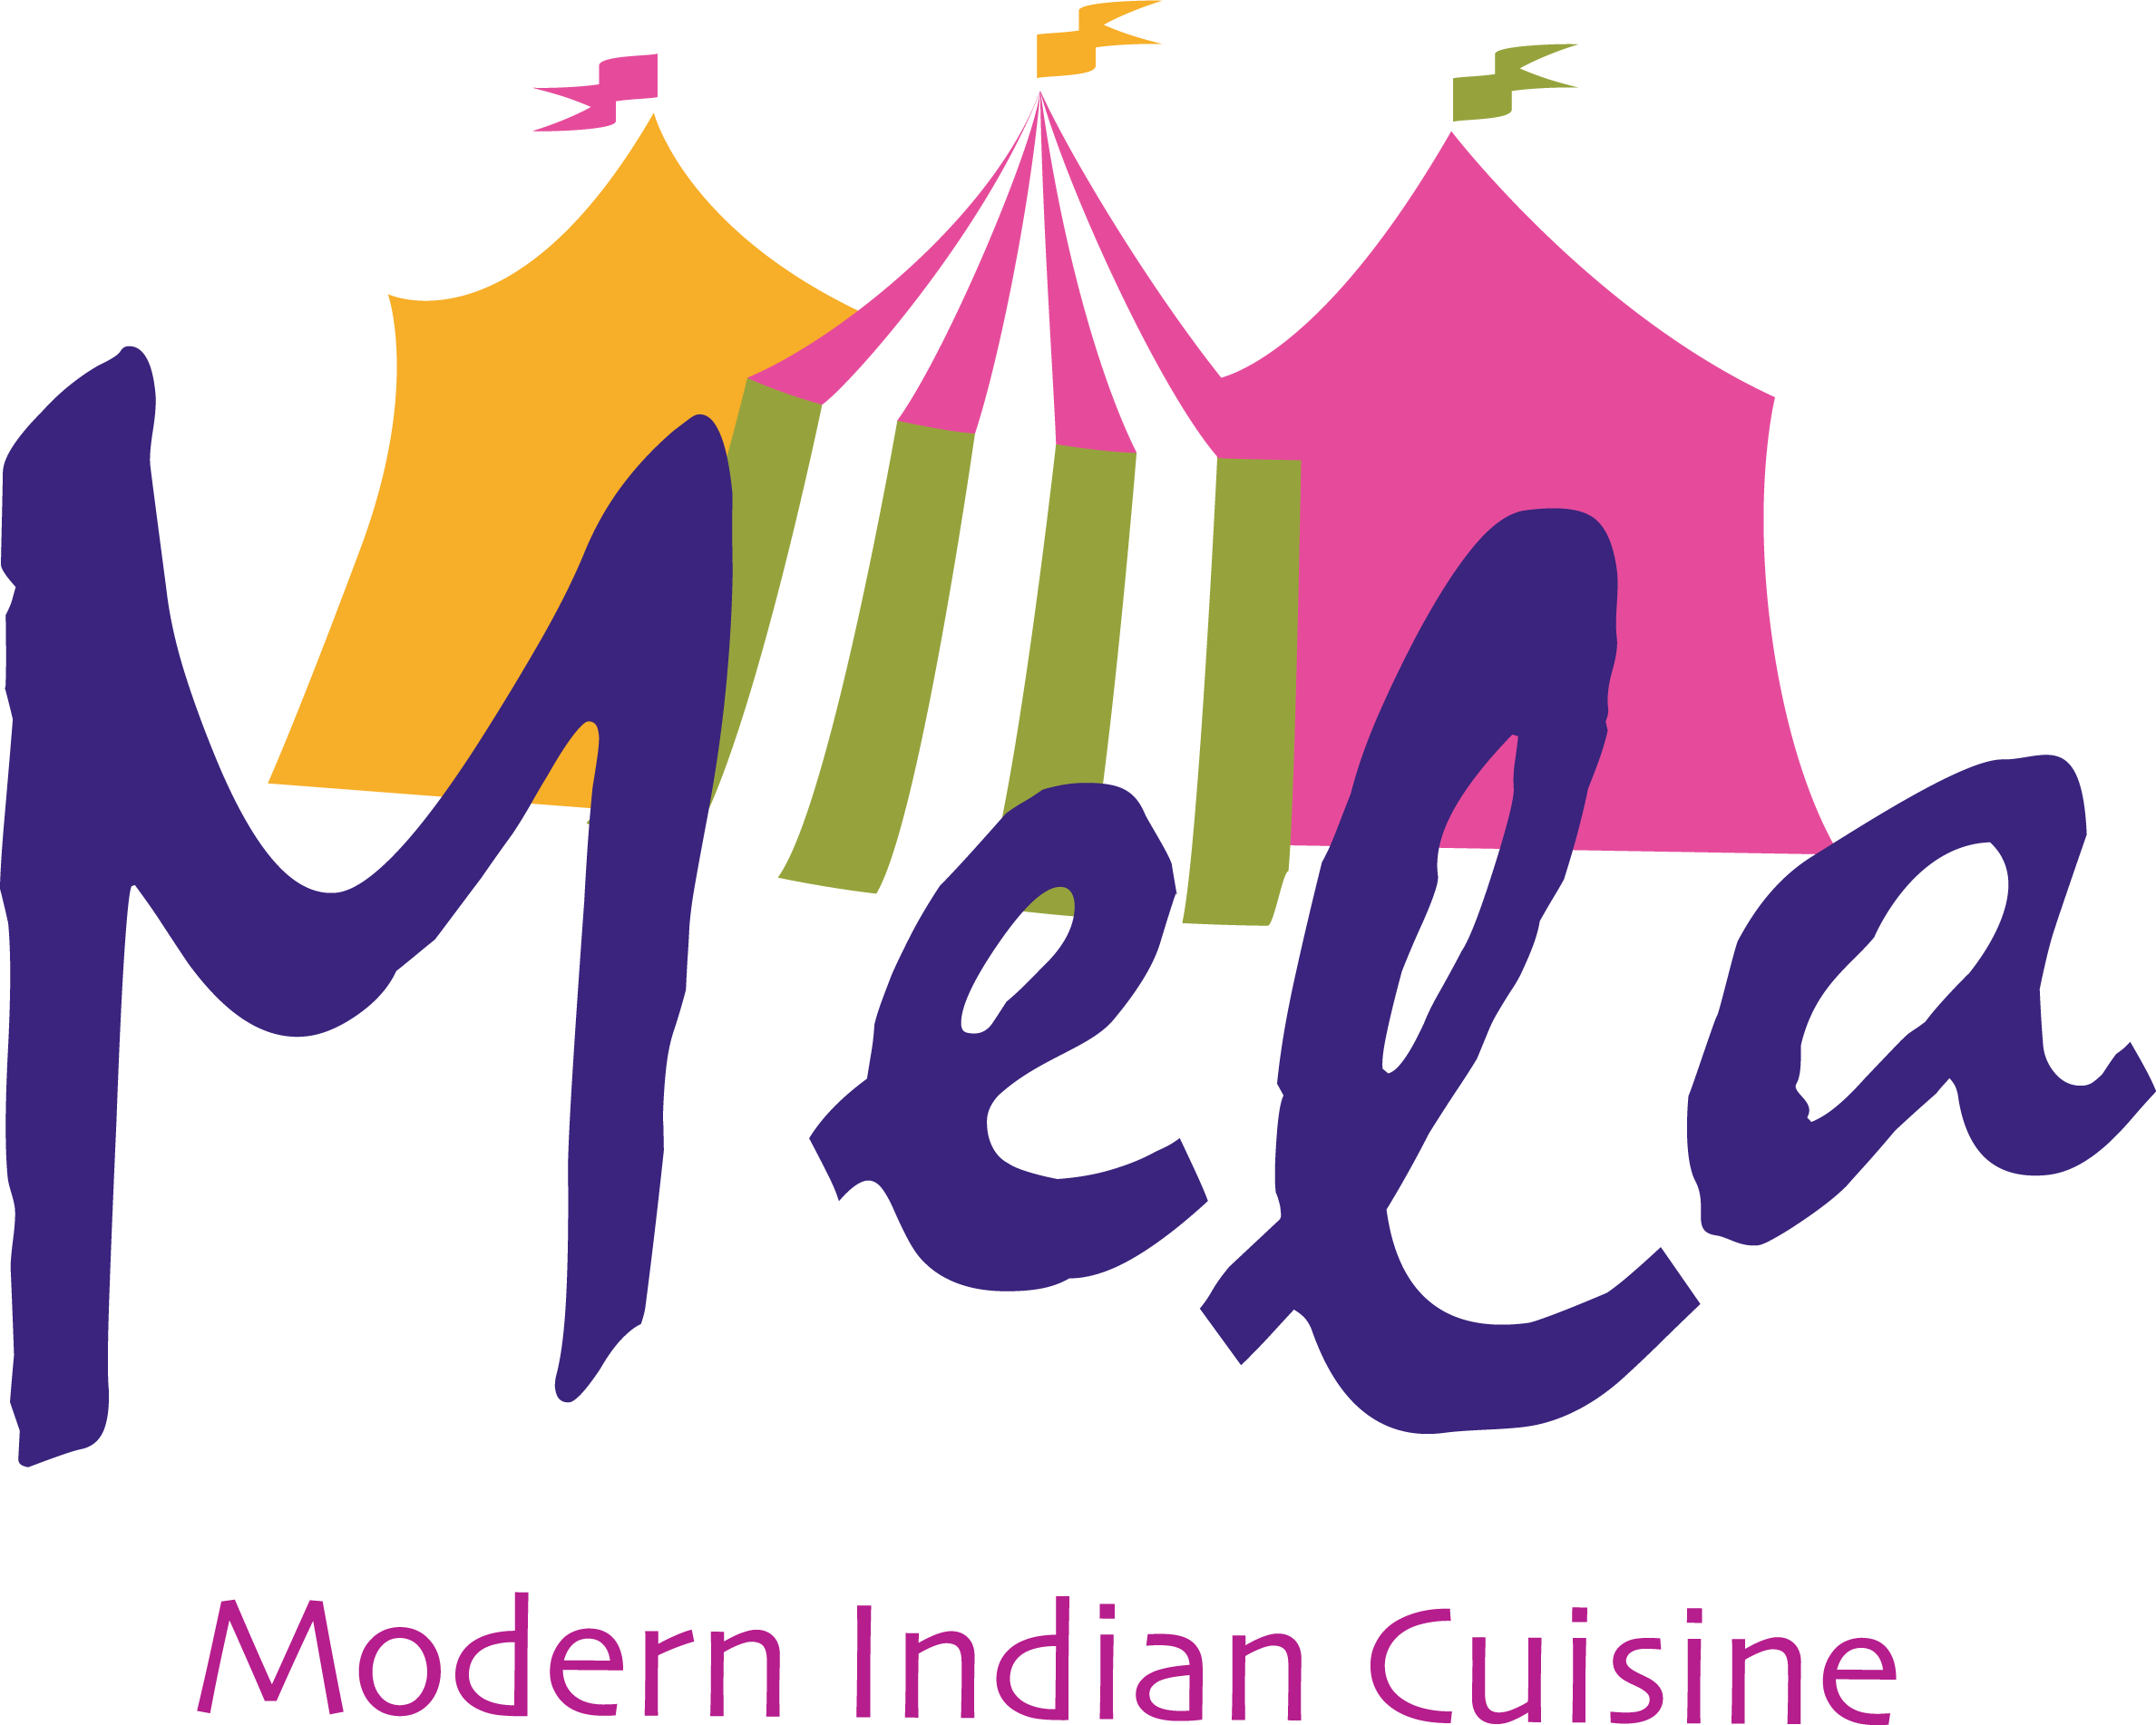 kisspng-mela-indian-restaurant-indian-cuisine-take-out-tre-university-clipart-5ae2d14bc37934.5055696215248141558007.png